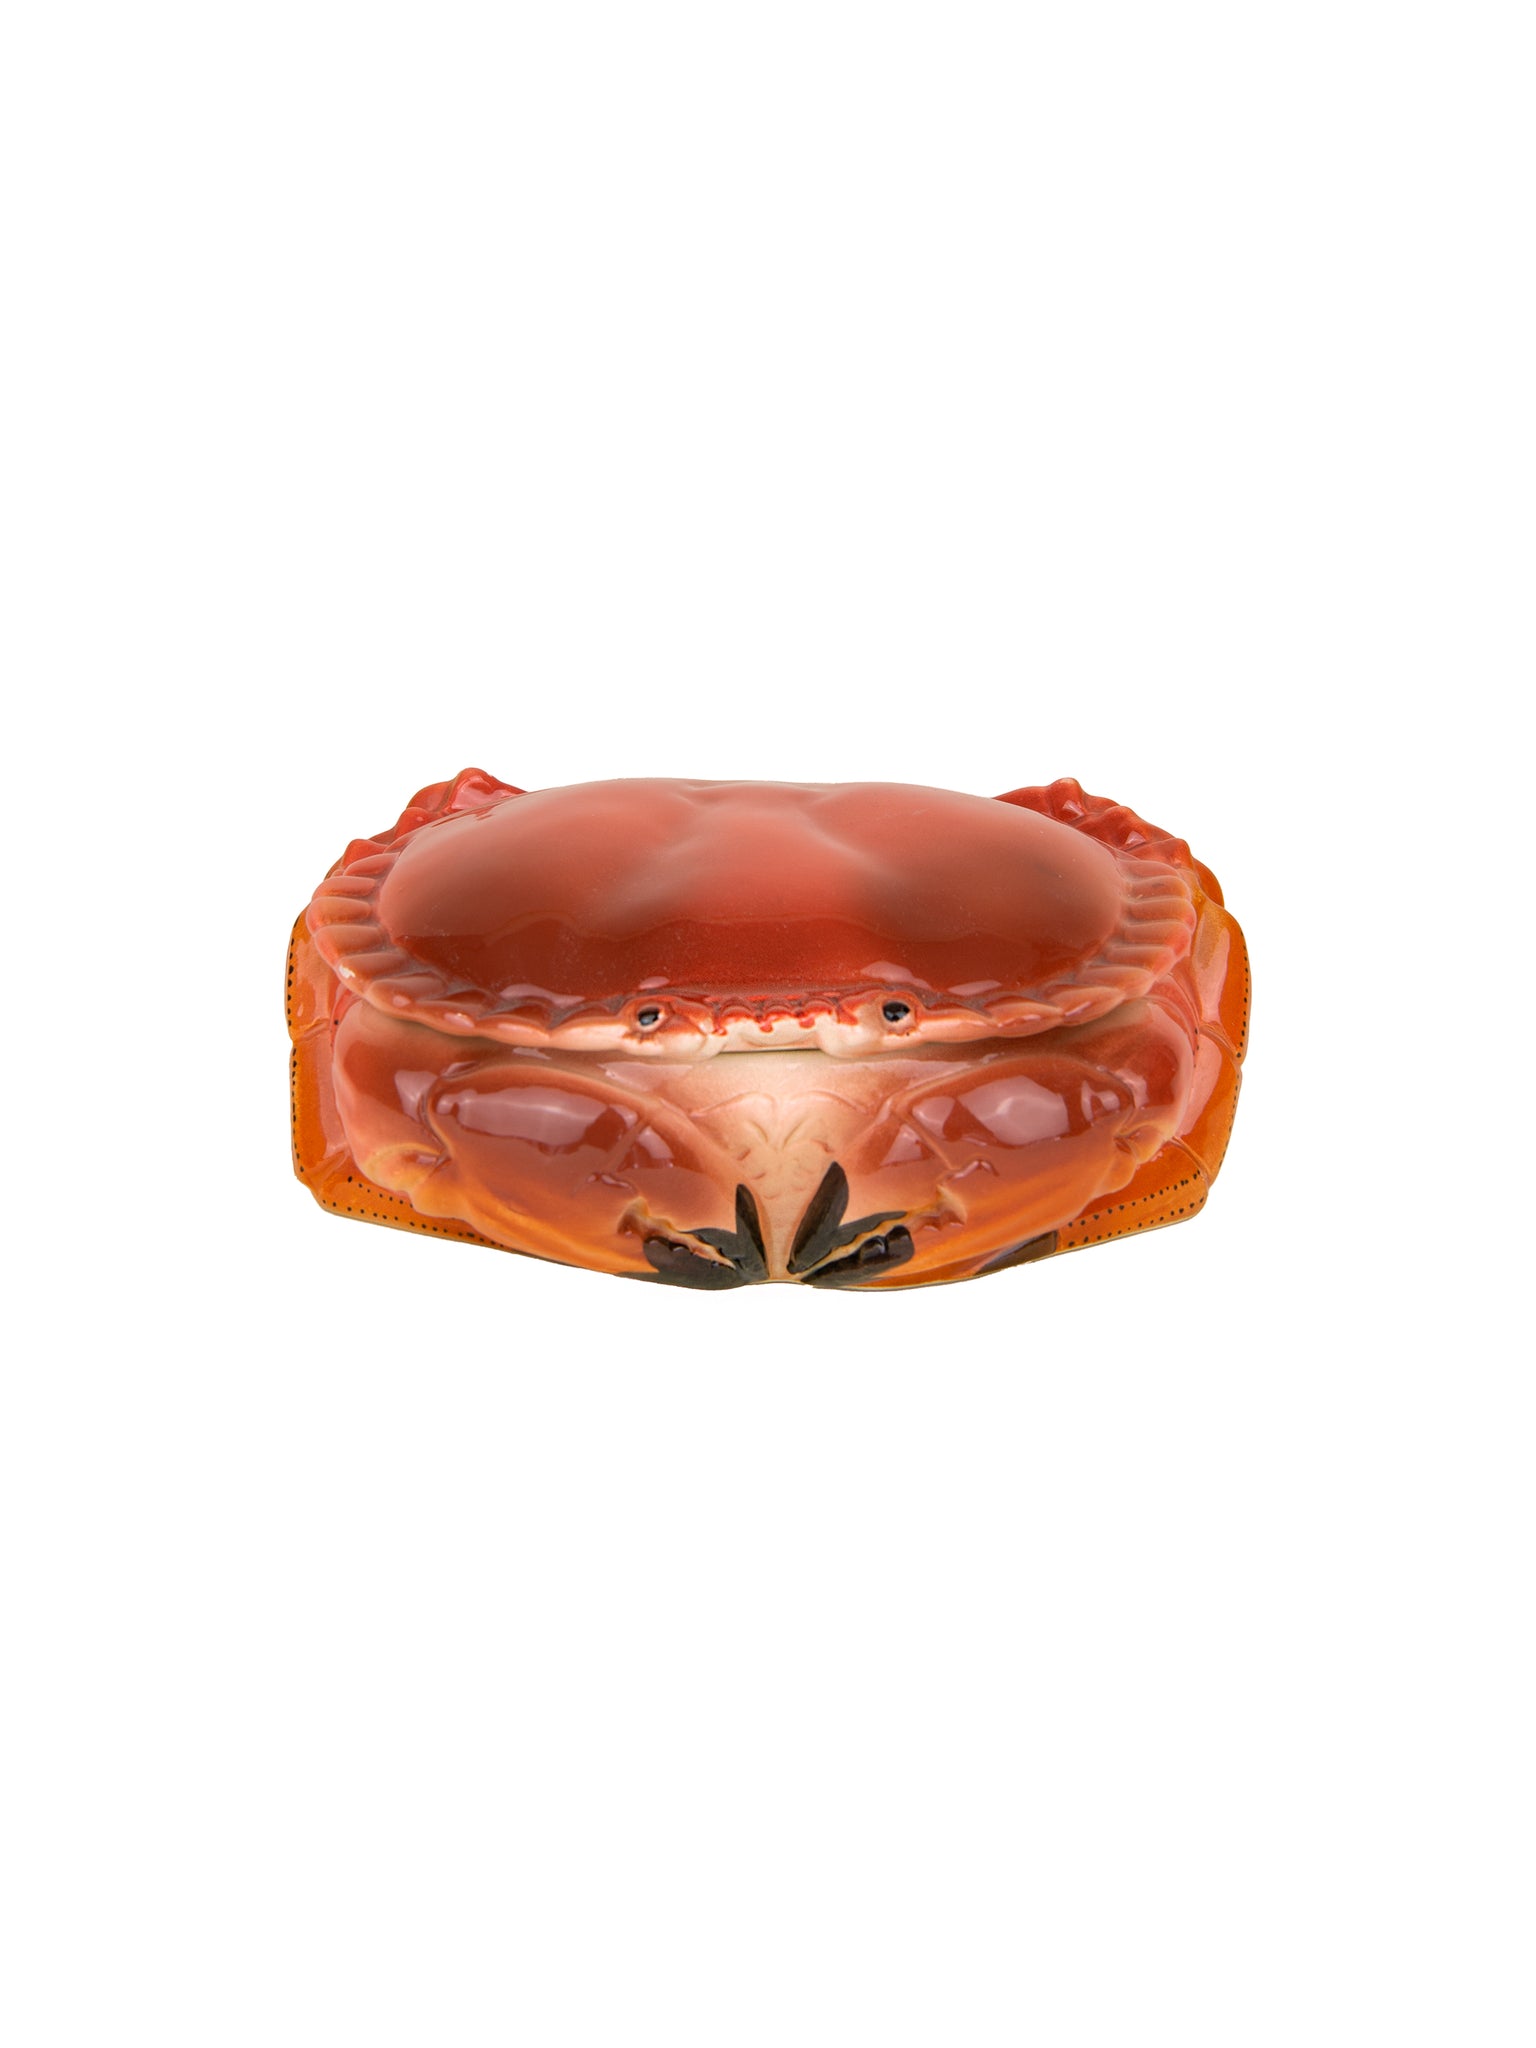 Vintage Michel Caugant Crab Tureen Weston Table